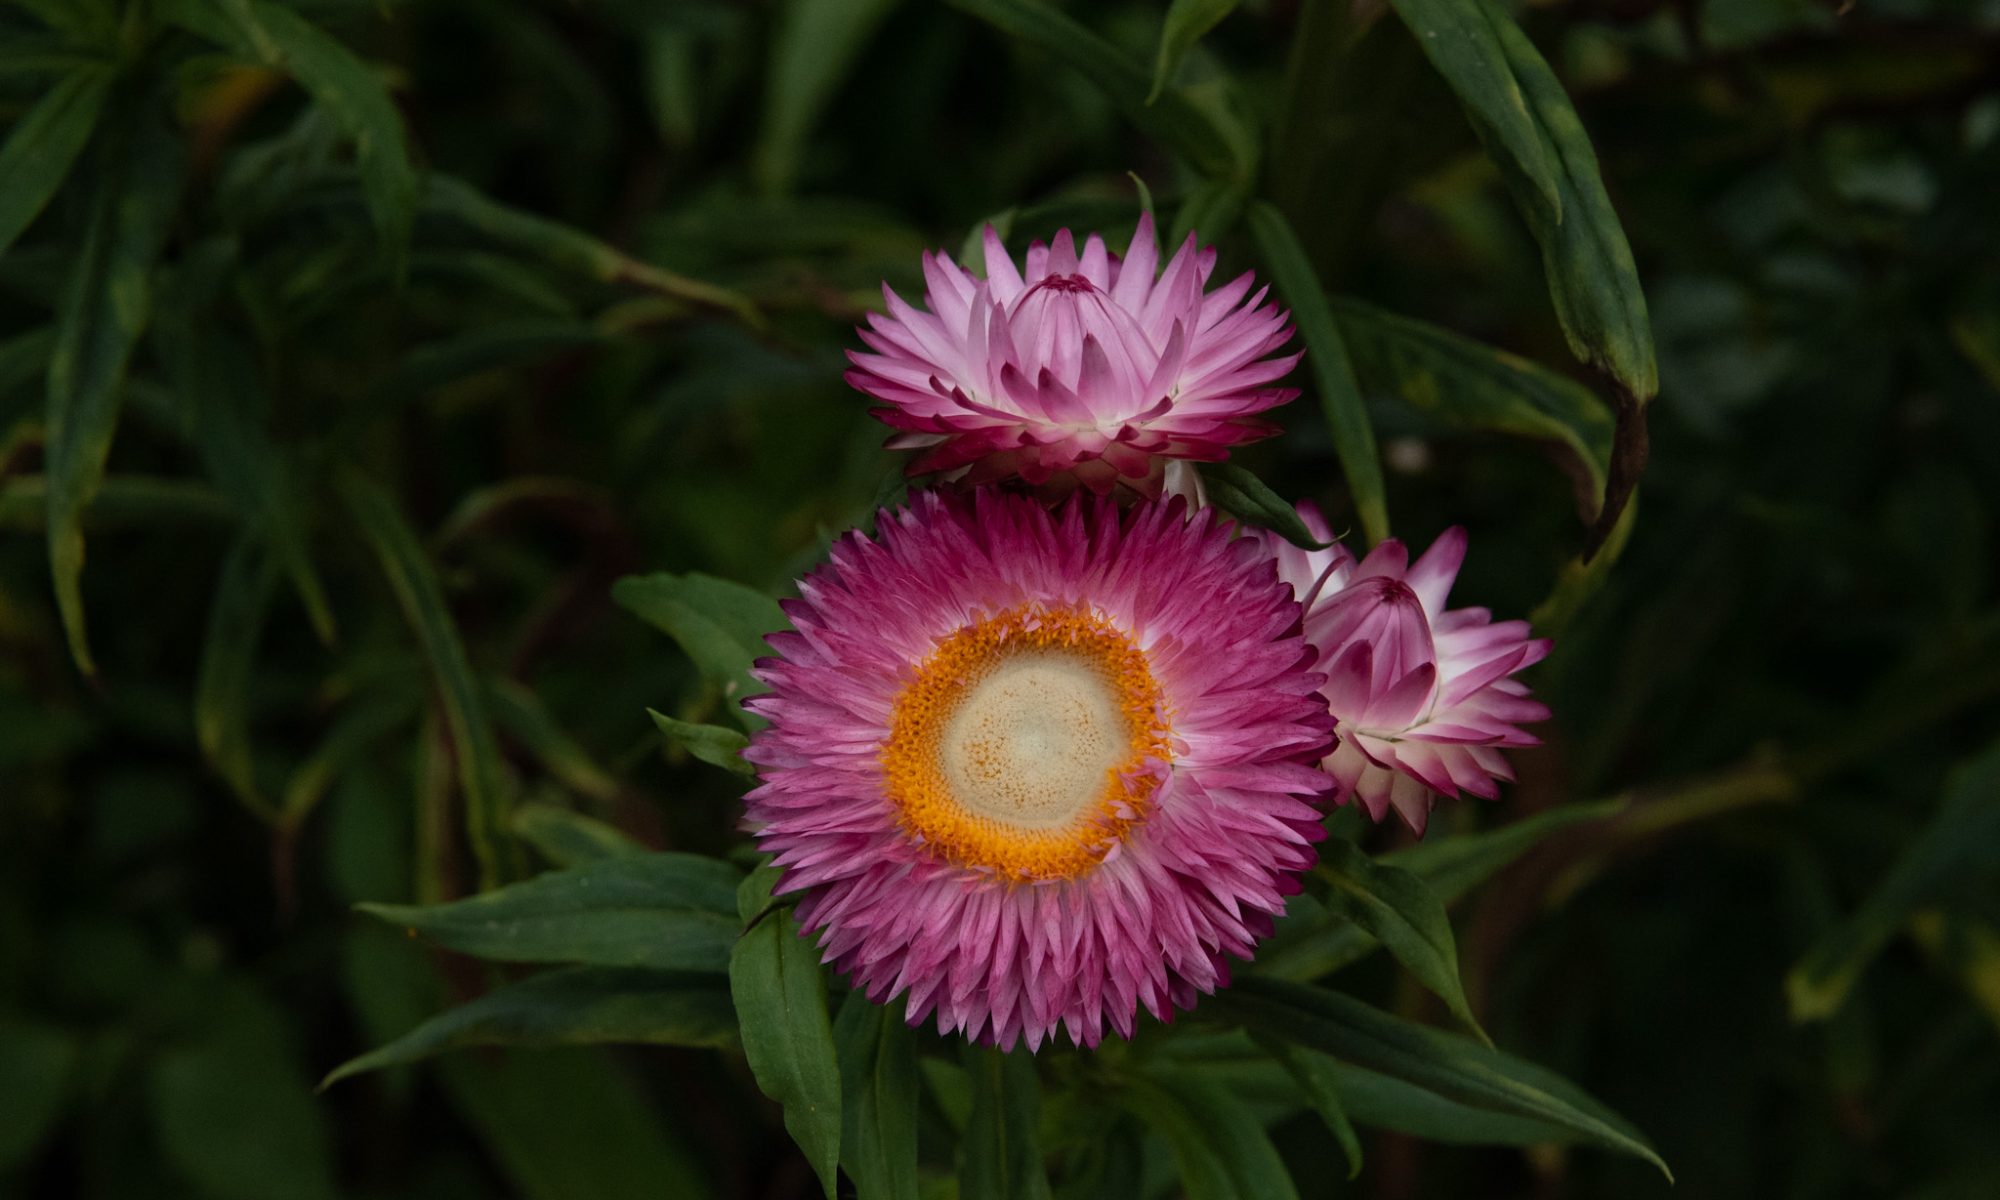 Helichrysum bracteatum 'Monstrosum' strobloem everlasting flower